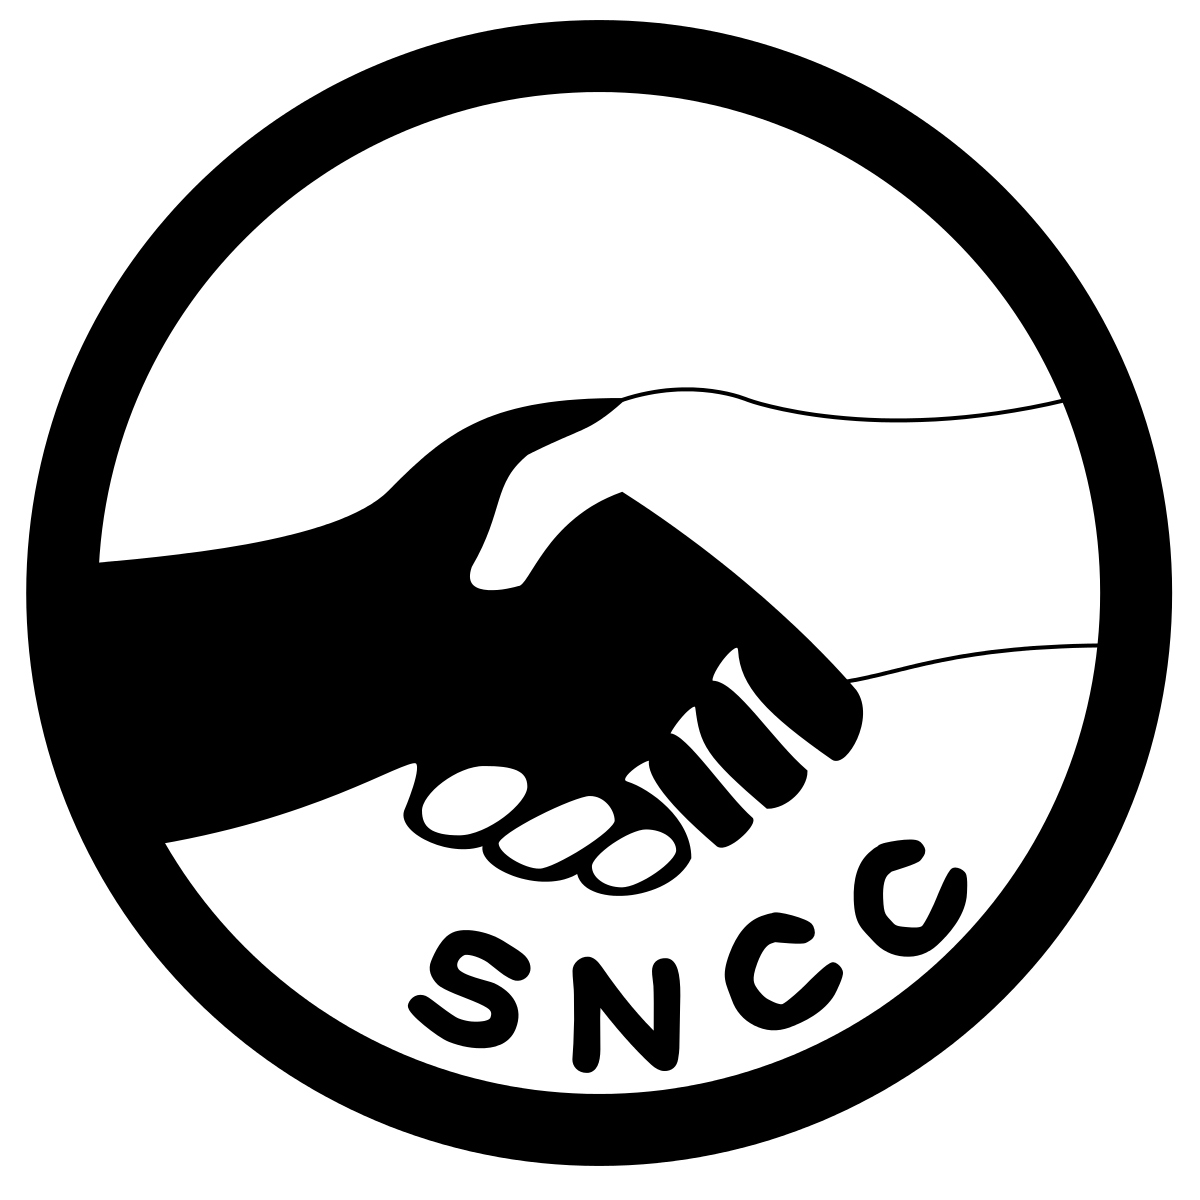 Hands clipart racism. Student nonviolent coordinating committee